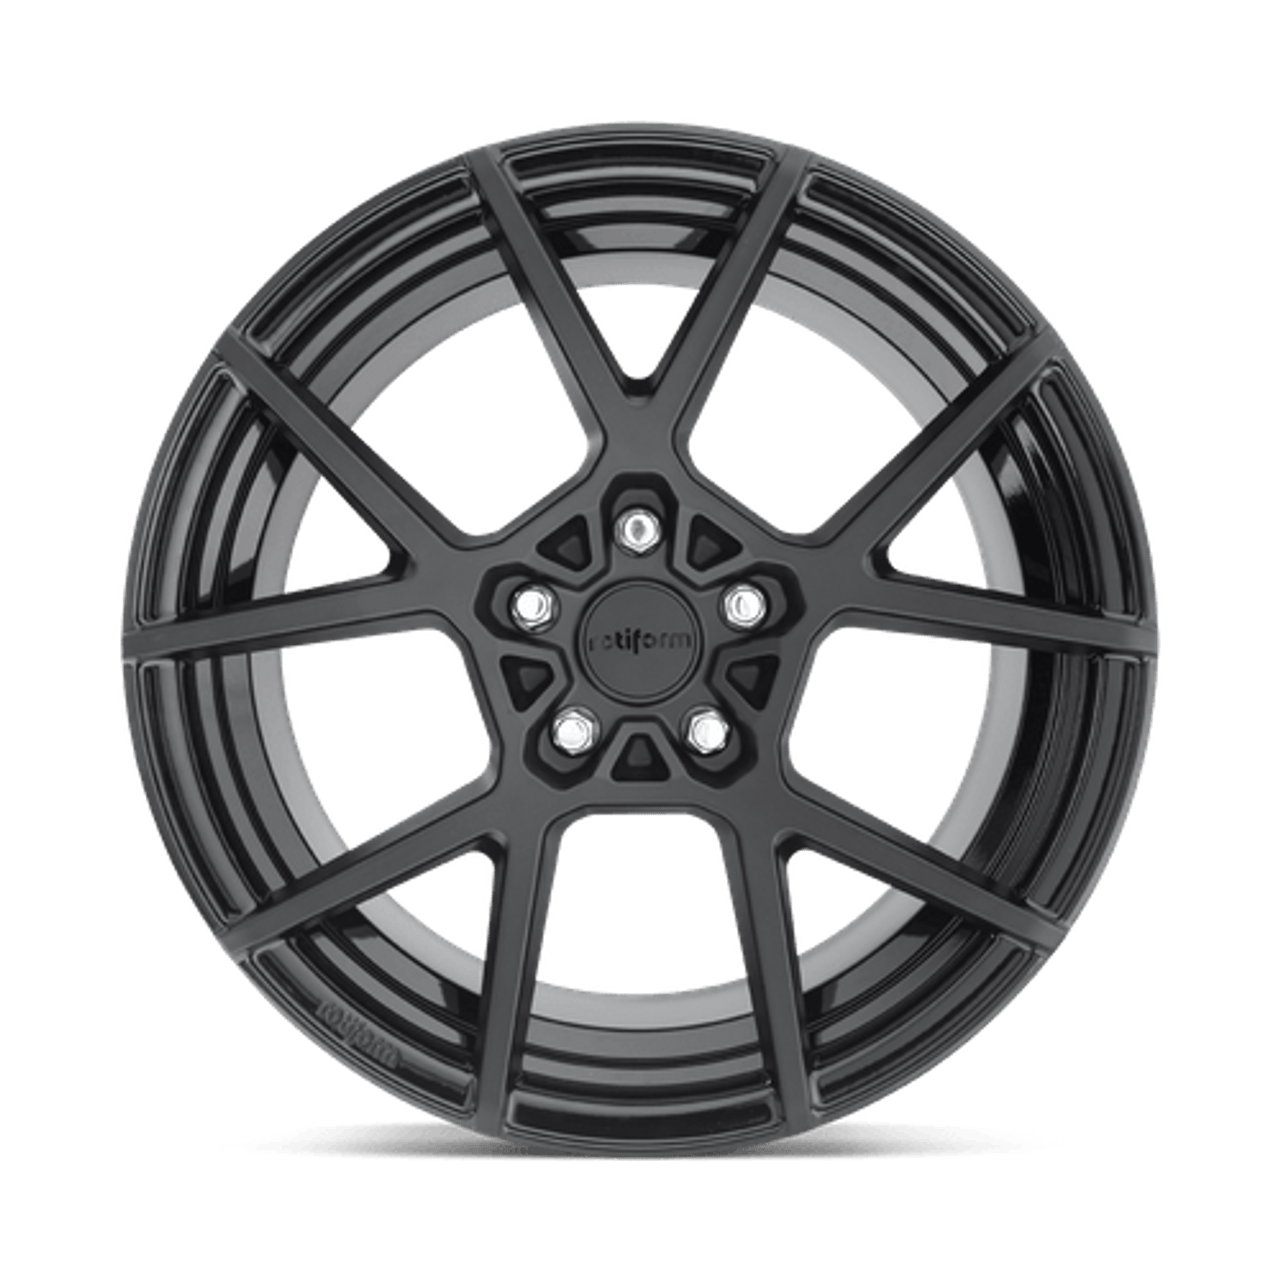 Rotiform R139 KPS Wheel 20x8.5 5x112 45 Offset - Matte Black